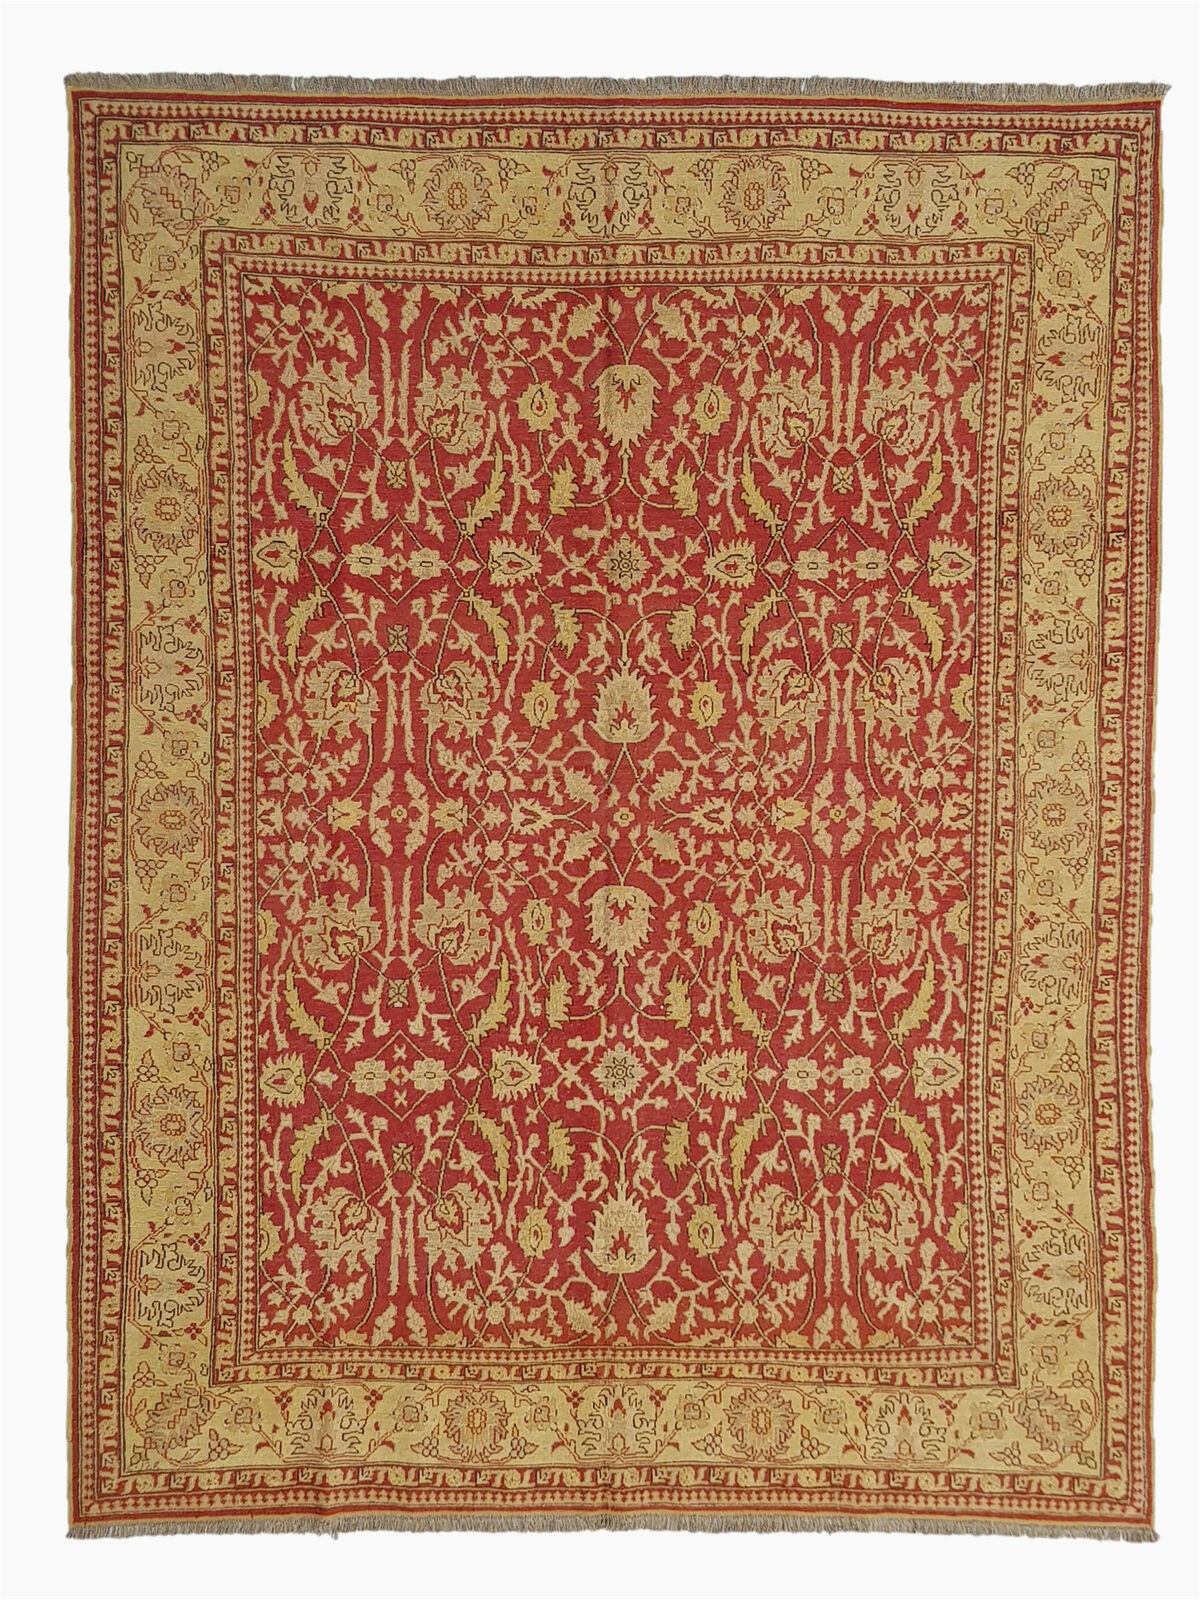 1046x820 antique handmade sumak kilim area rug fla